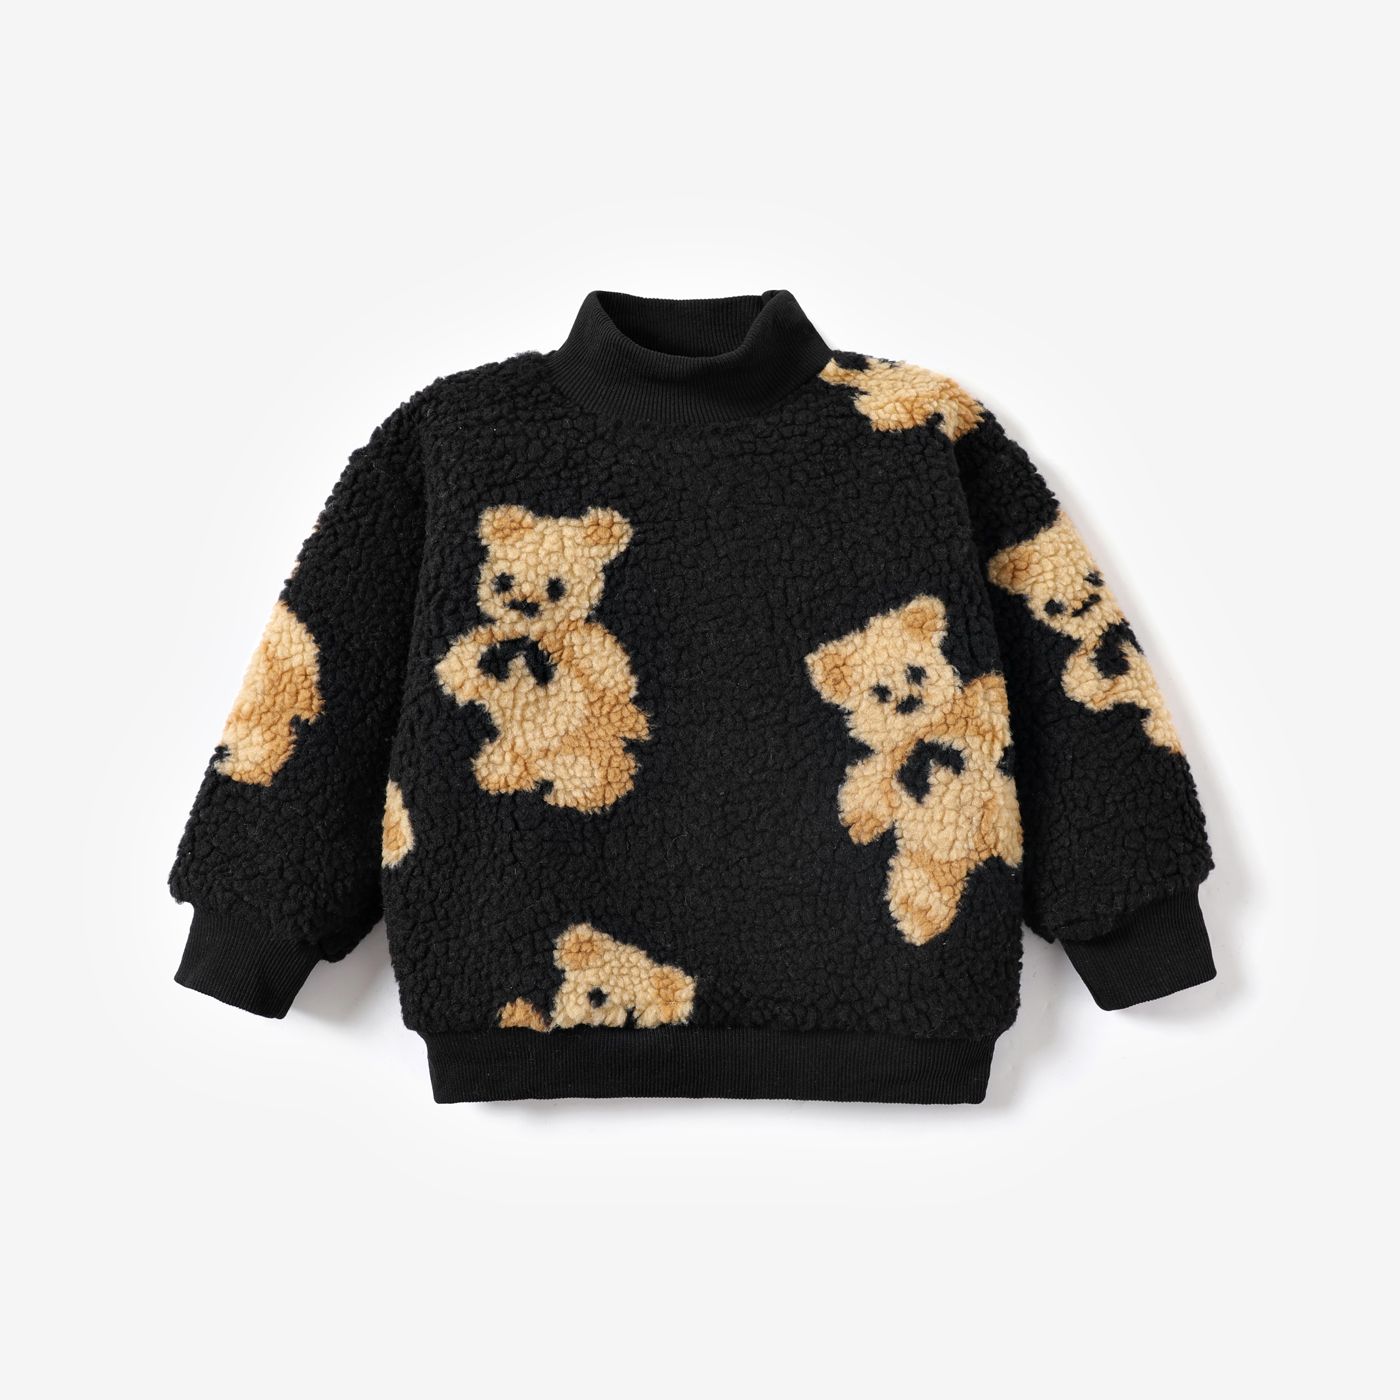 PatPat Teddy Sweater